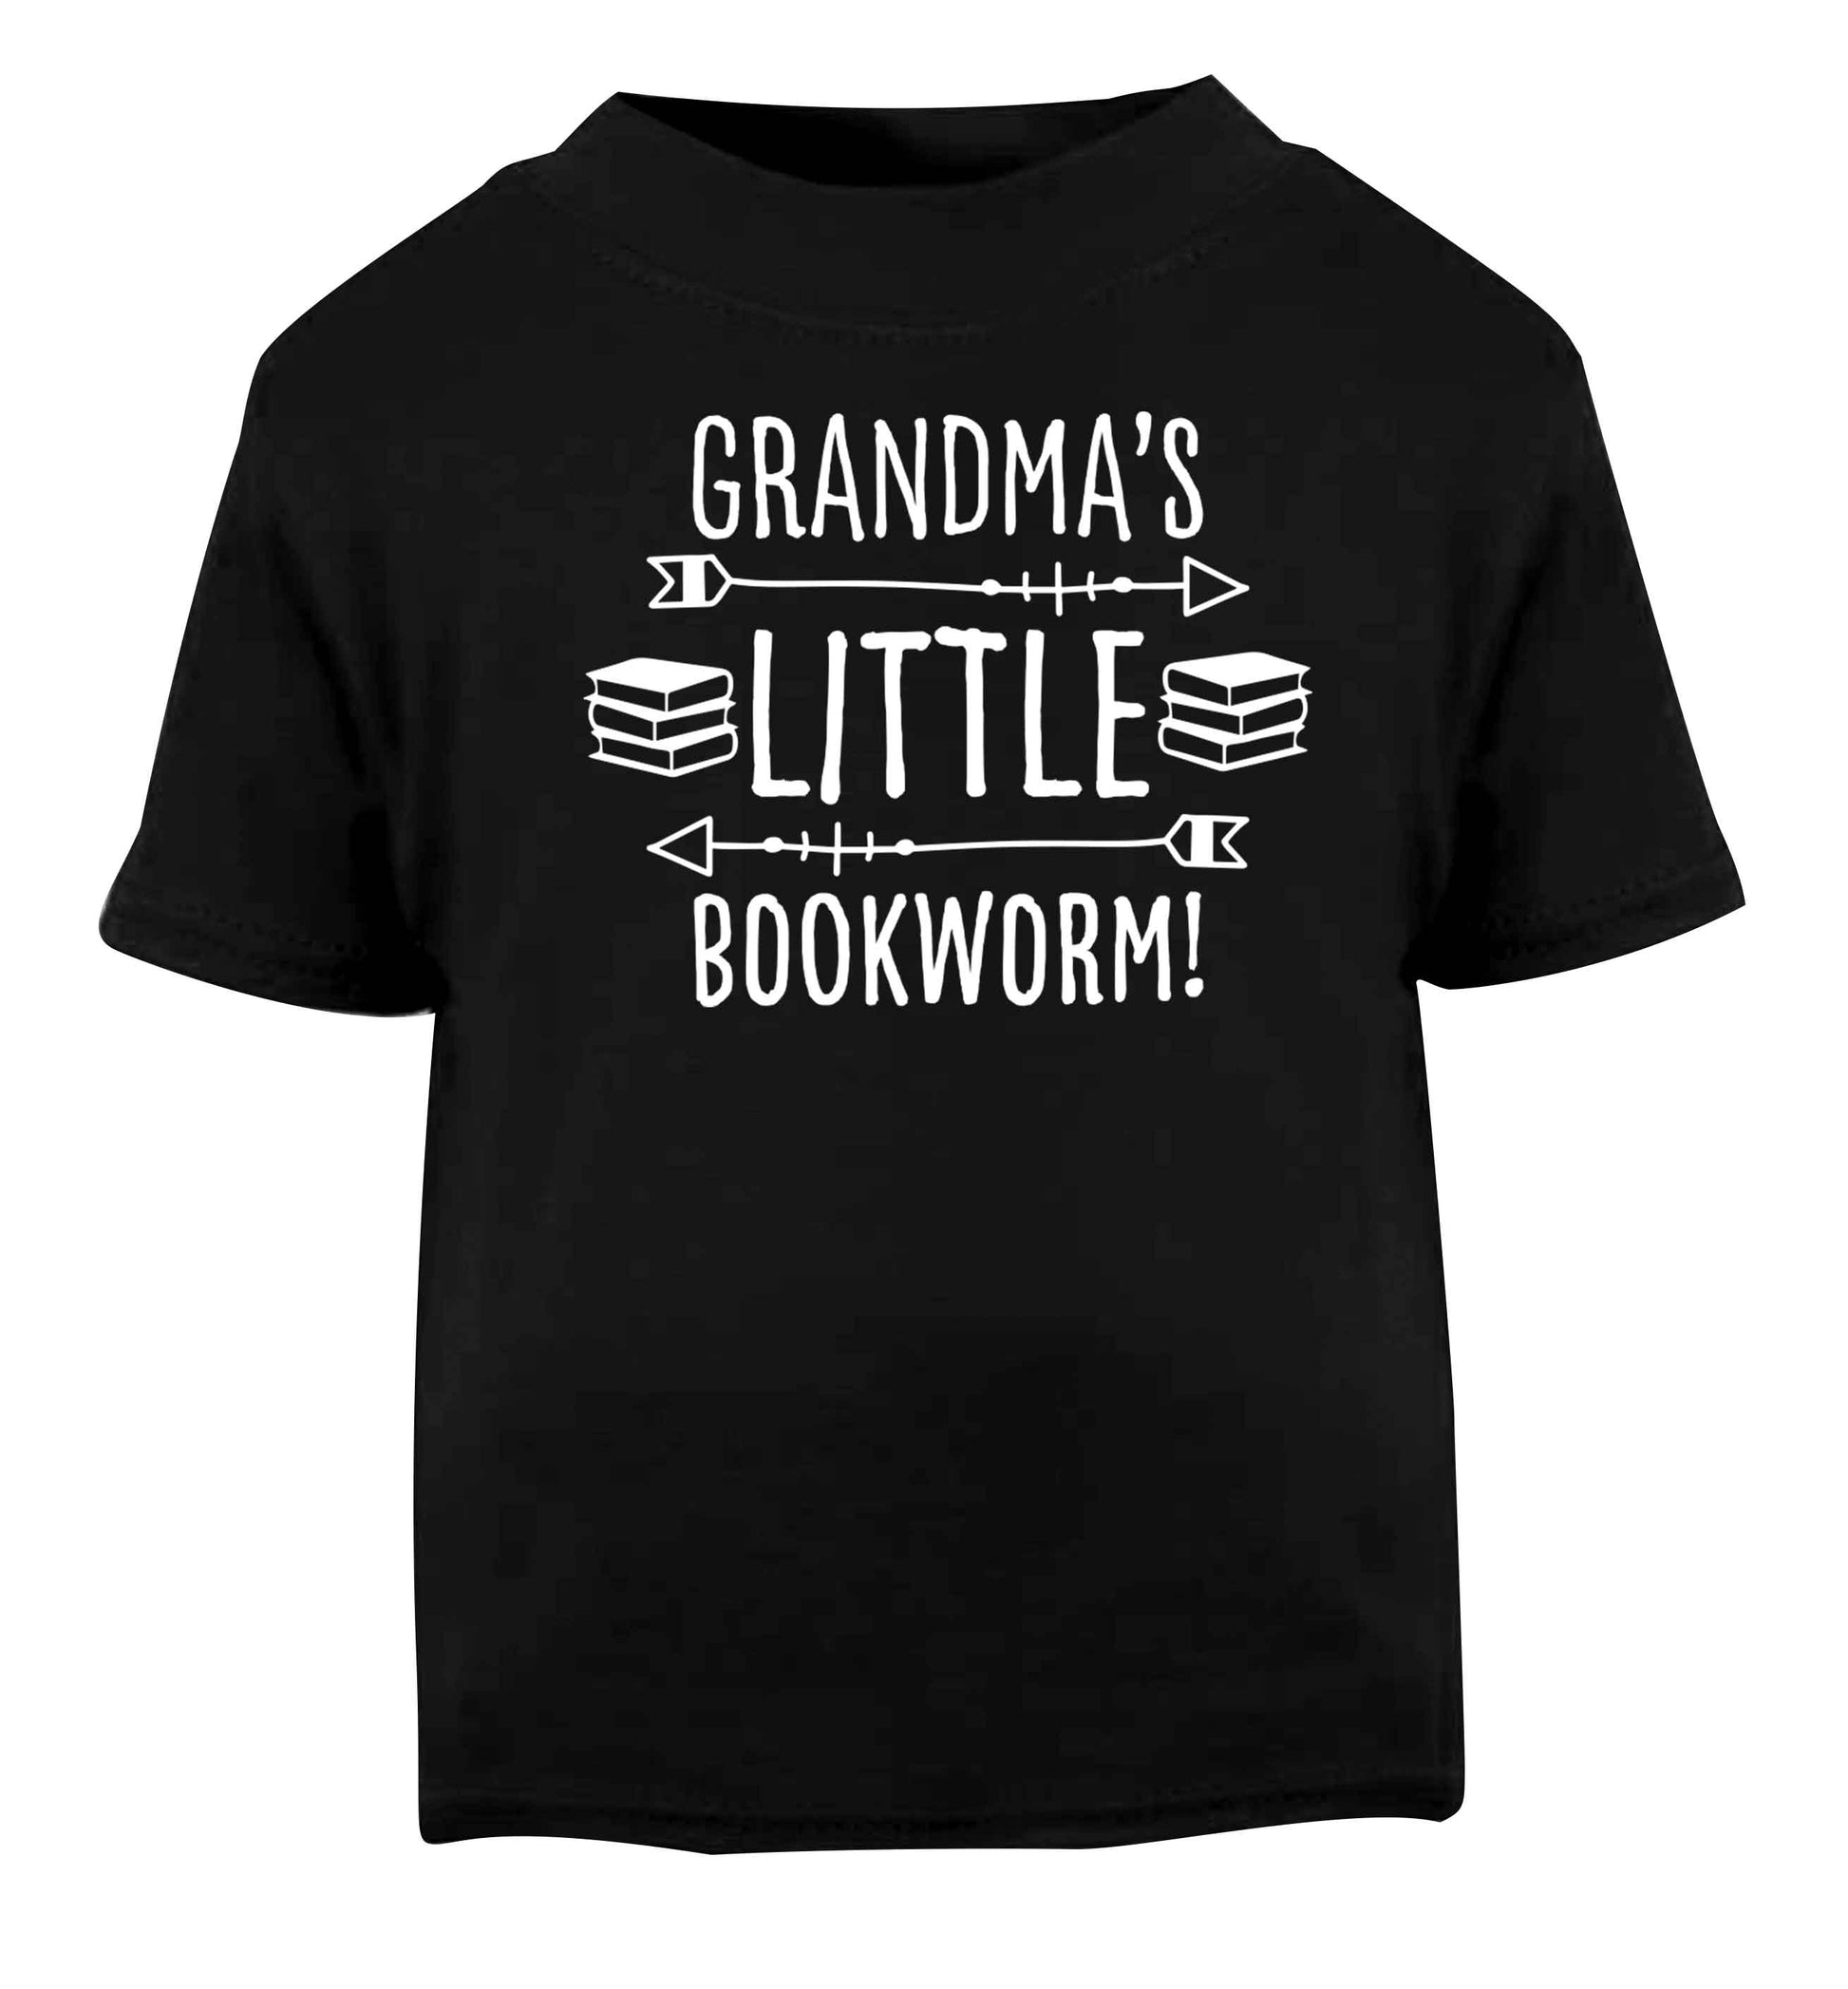 Grandma's little bookworm Black baby toddler Tshirt 2 years